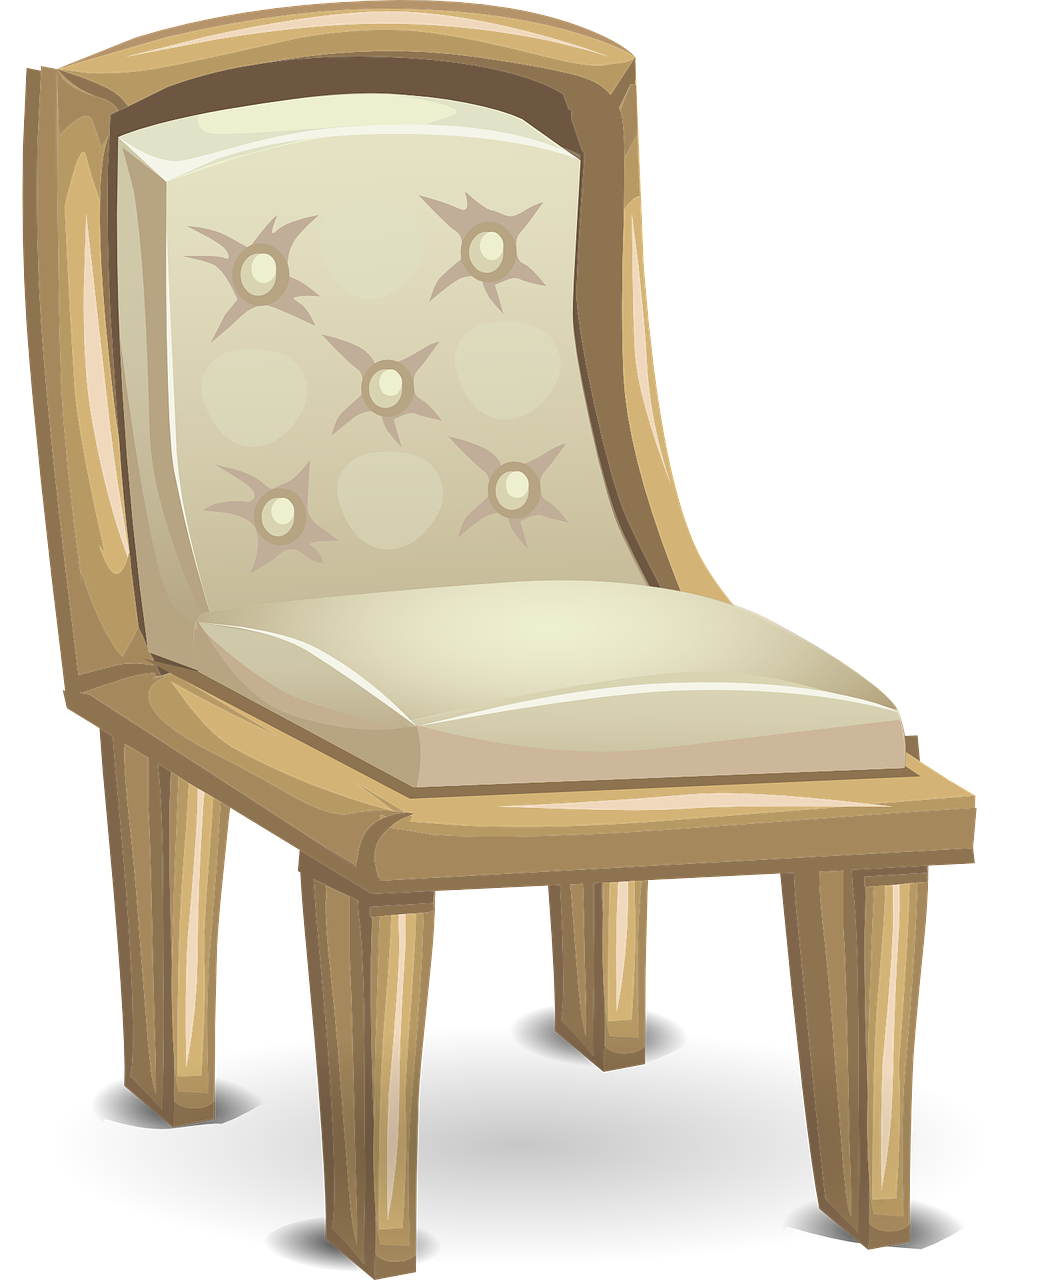 chair seat furniture free photo